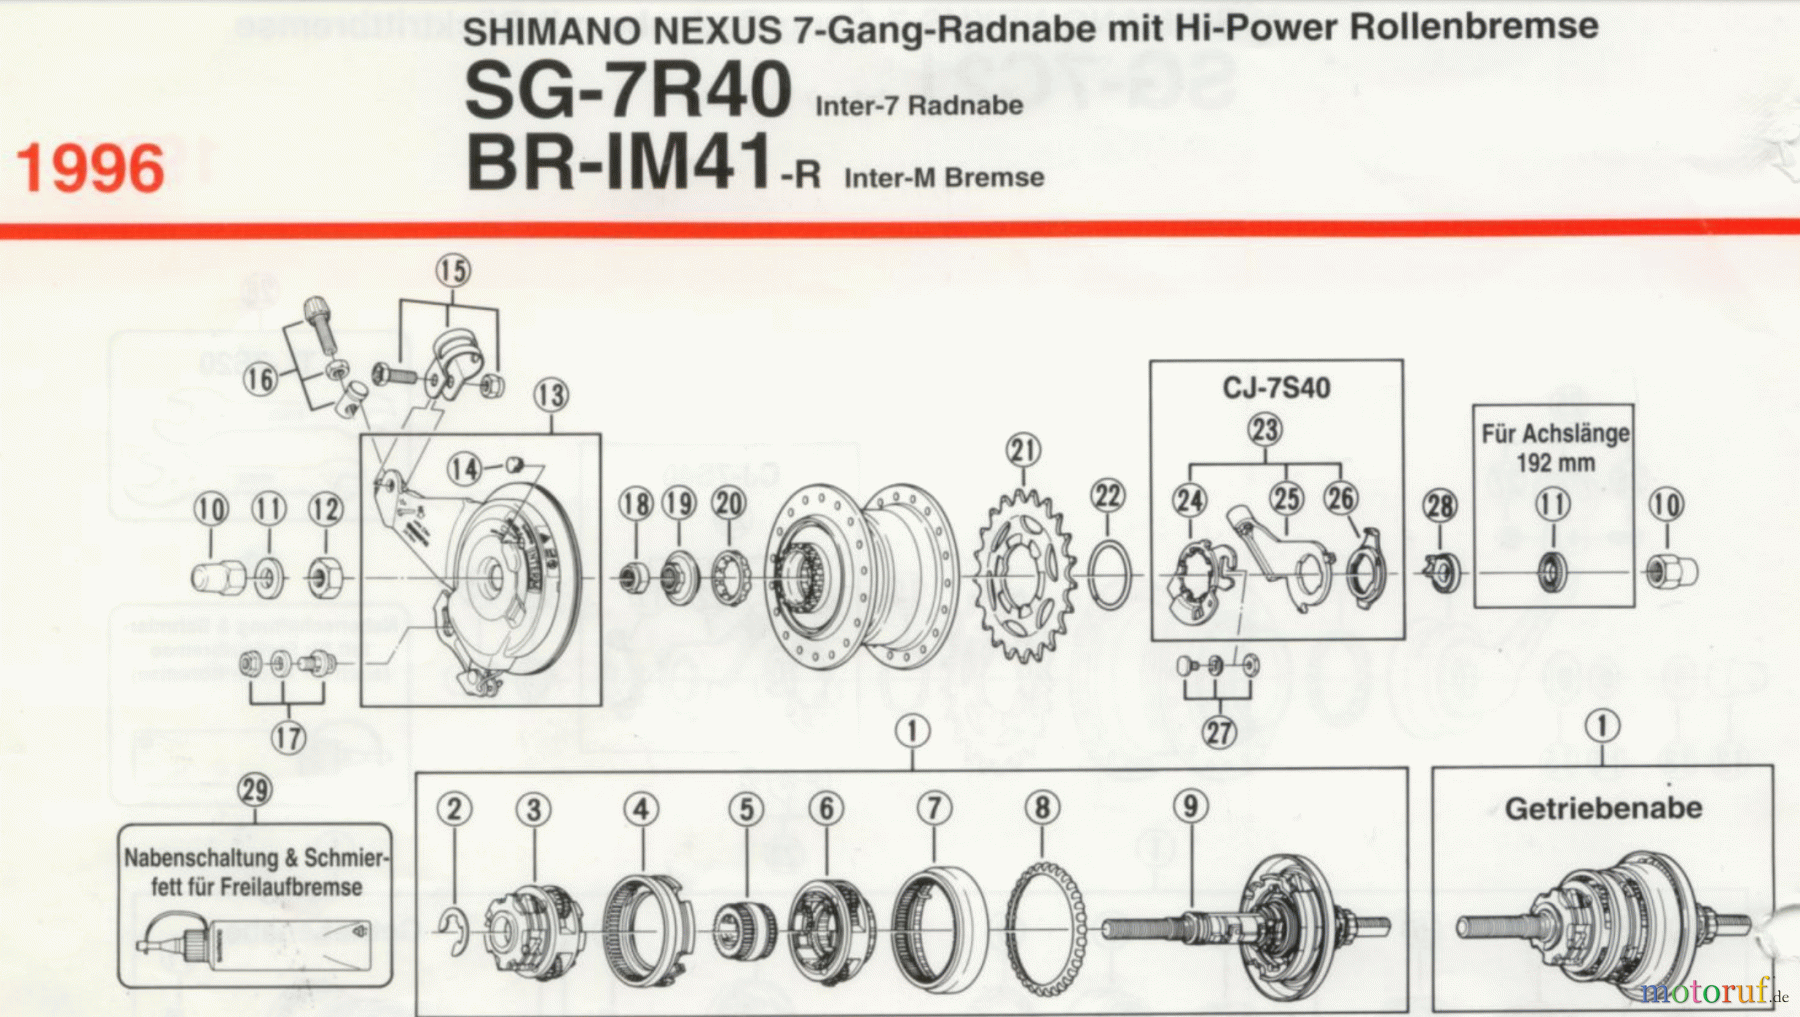  Shimano SG Getriebenabe /Nabenschaltung SG-7R40 Shimano Nexus 7-Gang Radnabe 1996